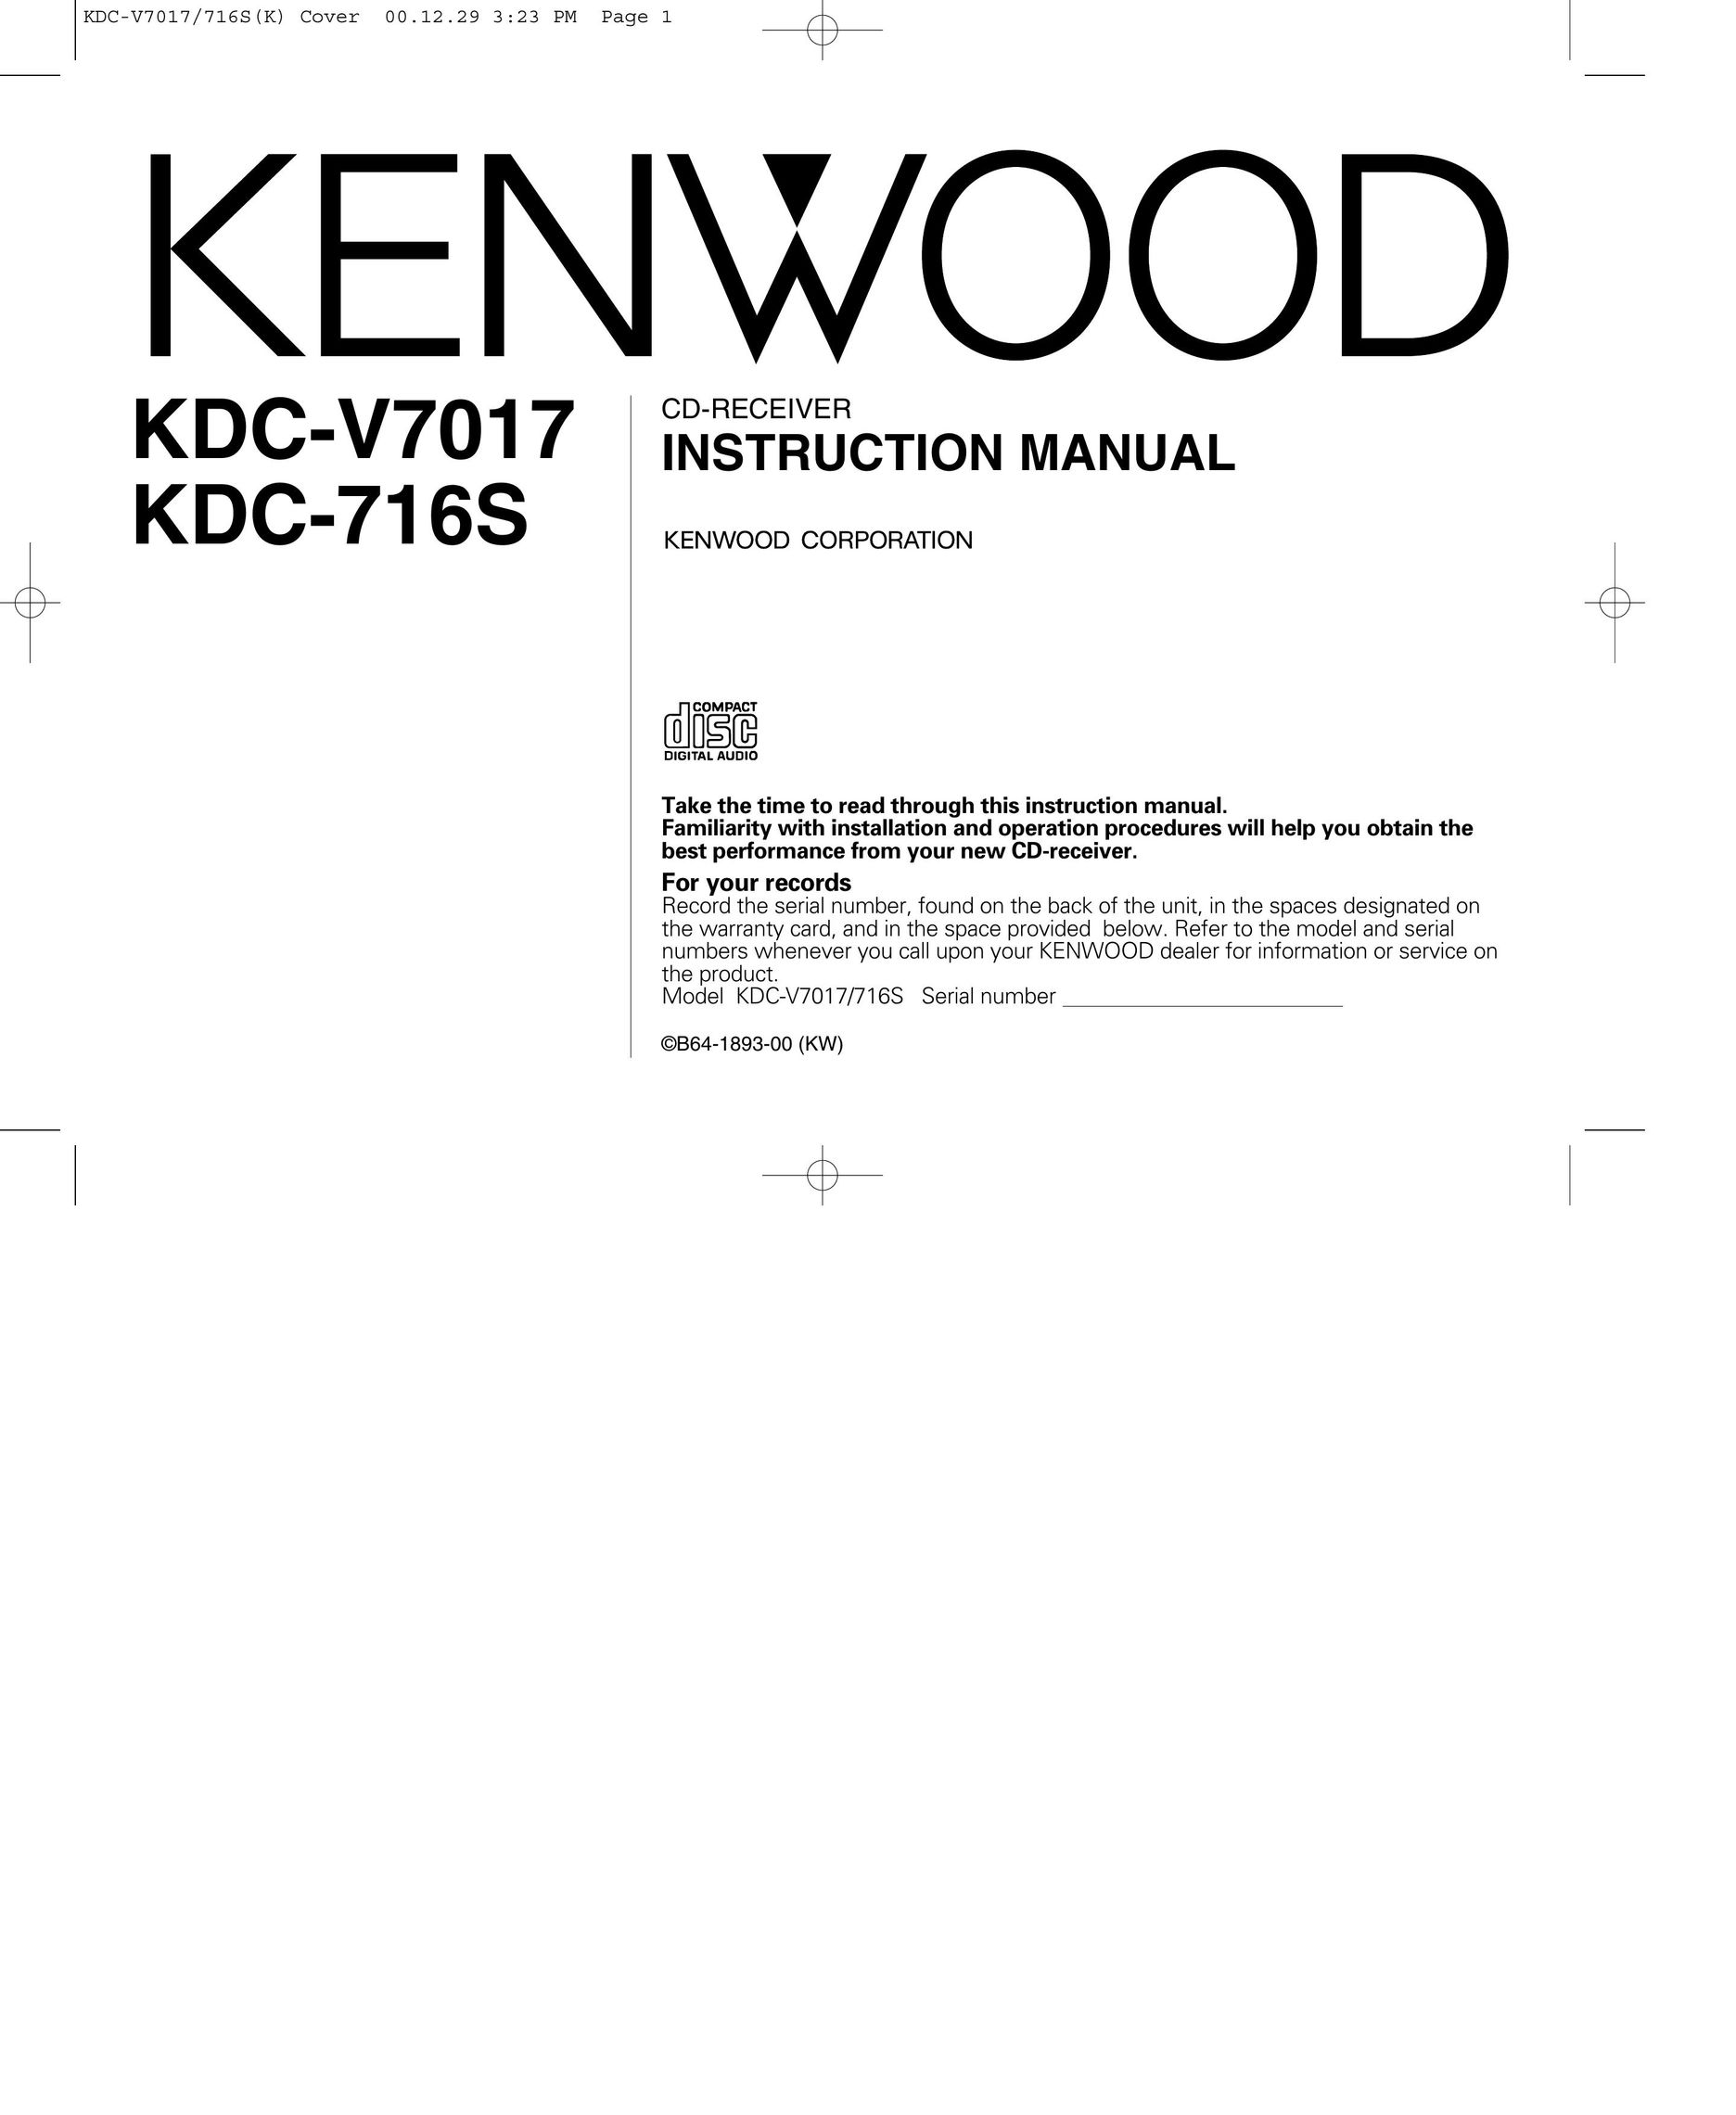 Kenwood CD-RECEIVER CD Player User Manual